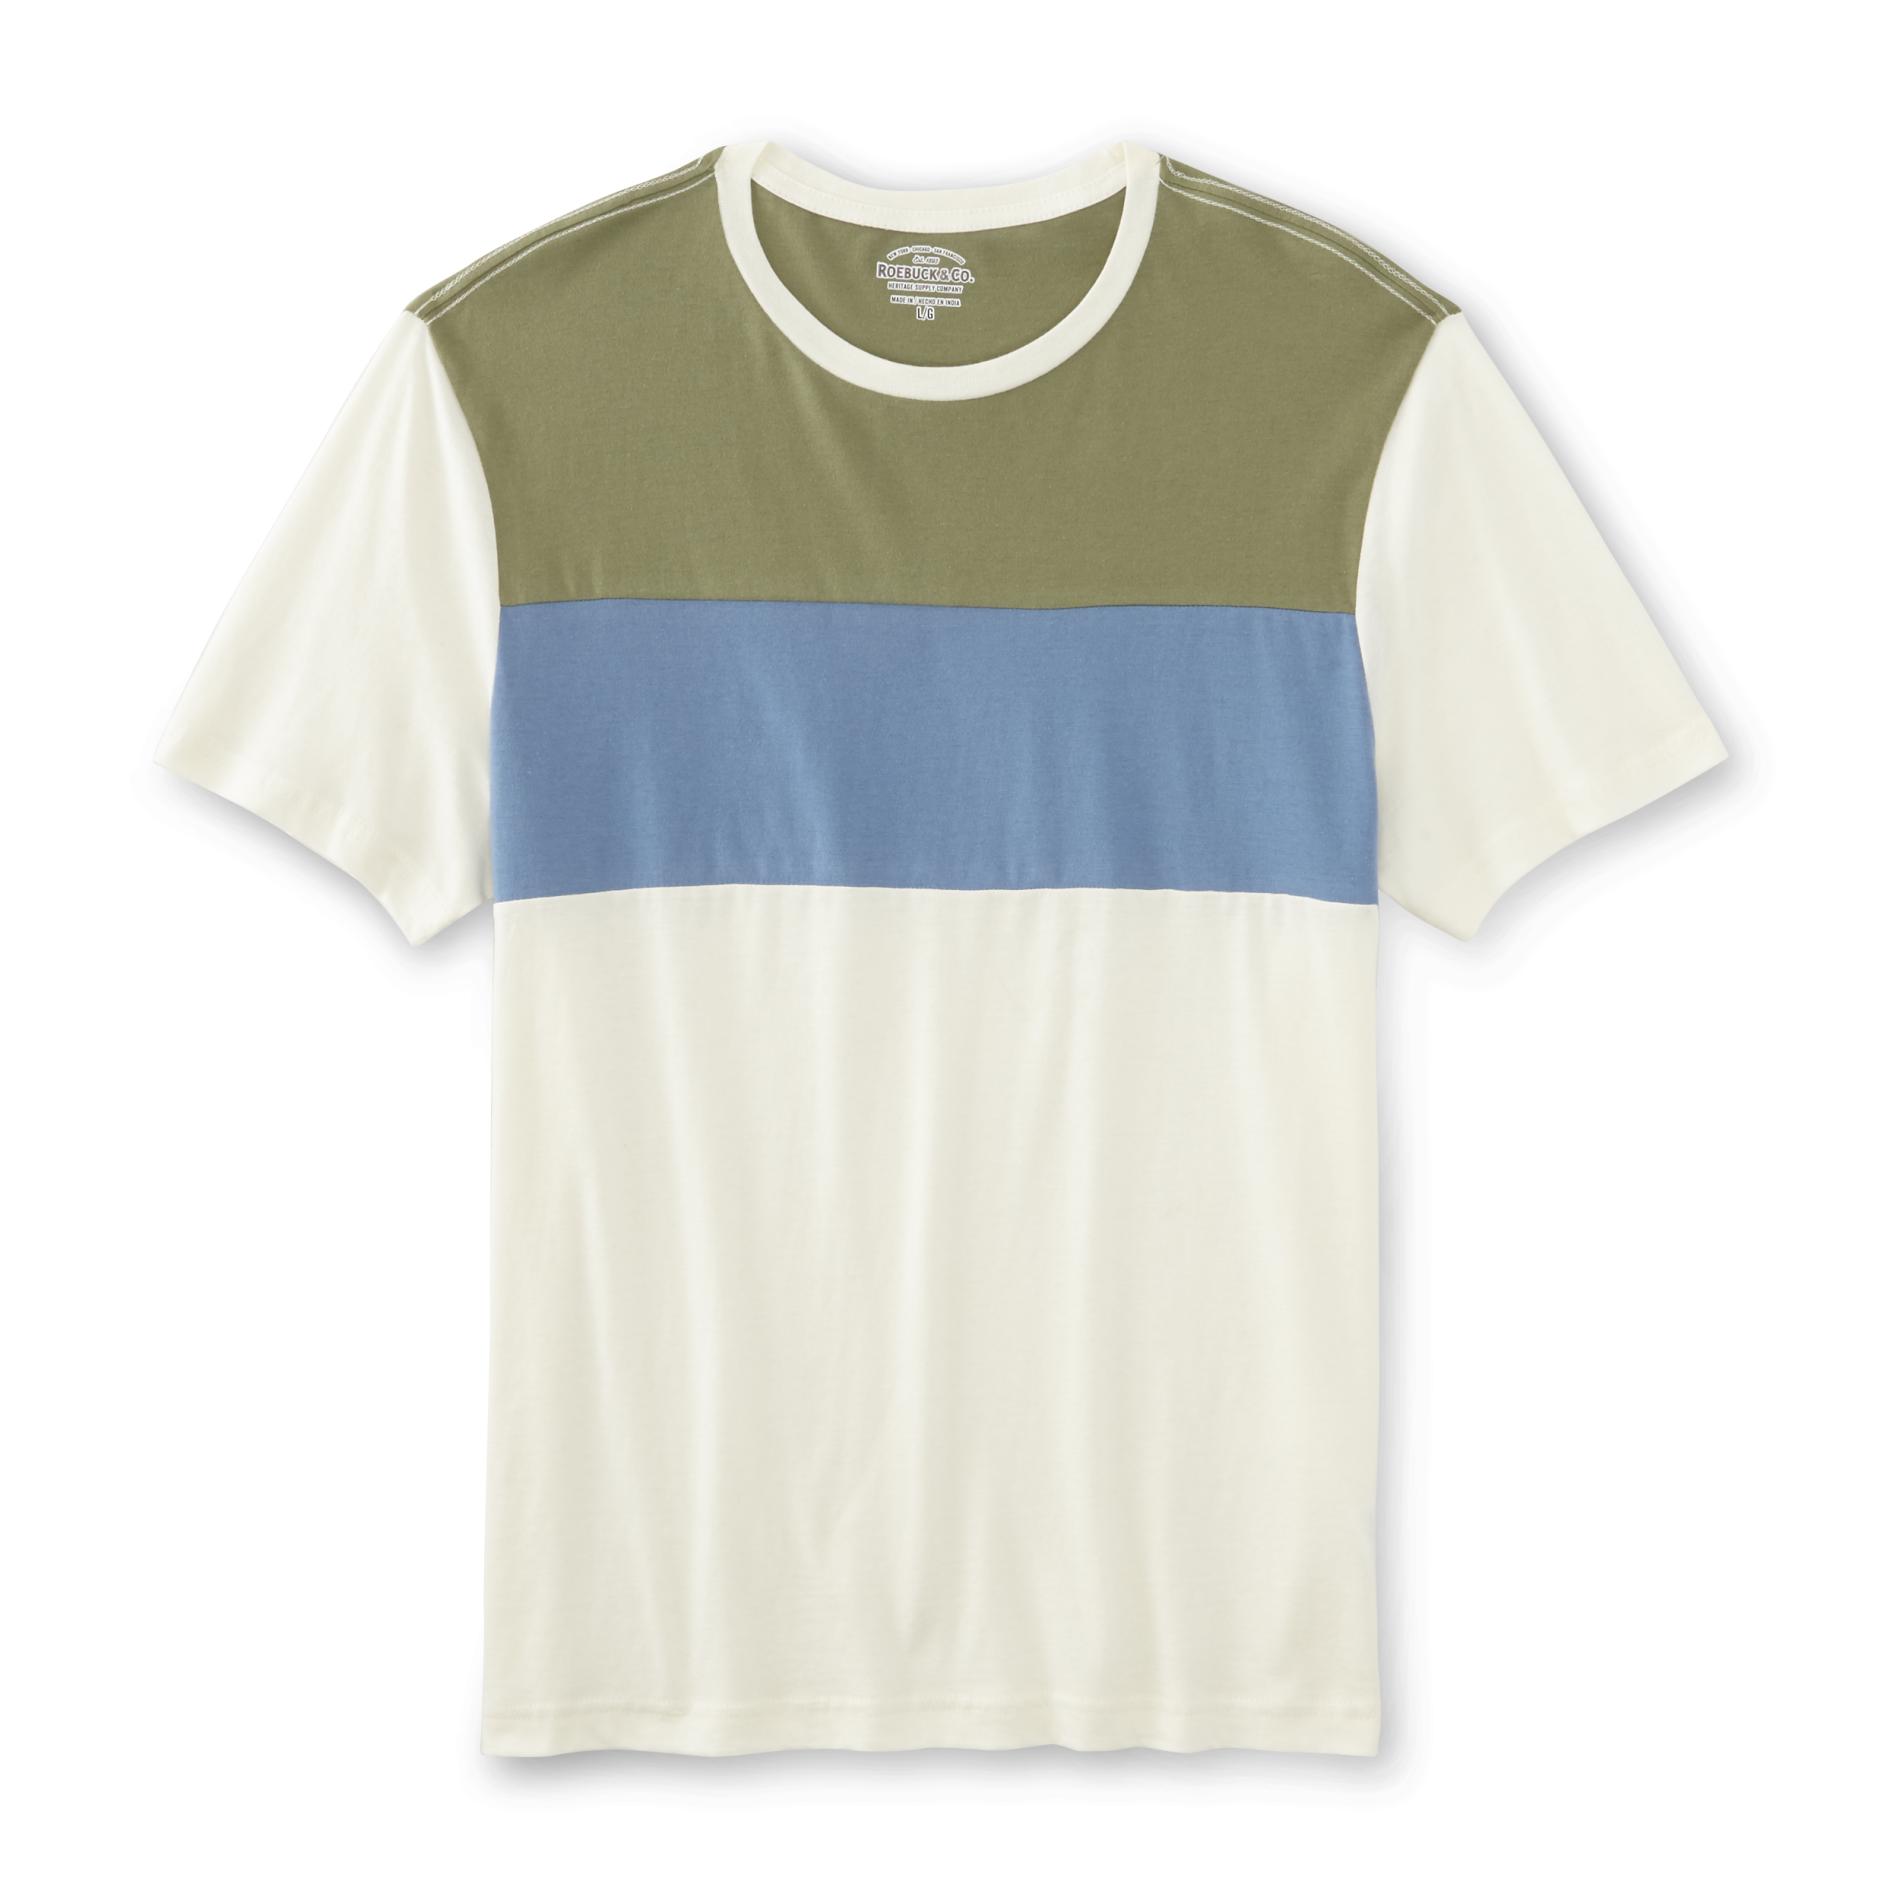 Roebuck & Co. Young Men's T-Shirt - Colorblock